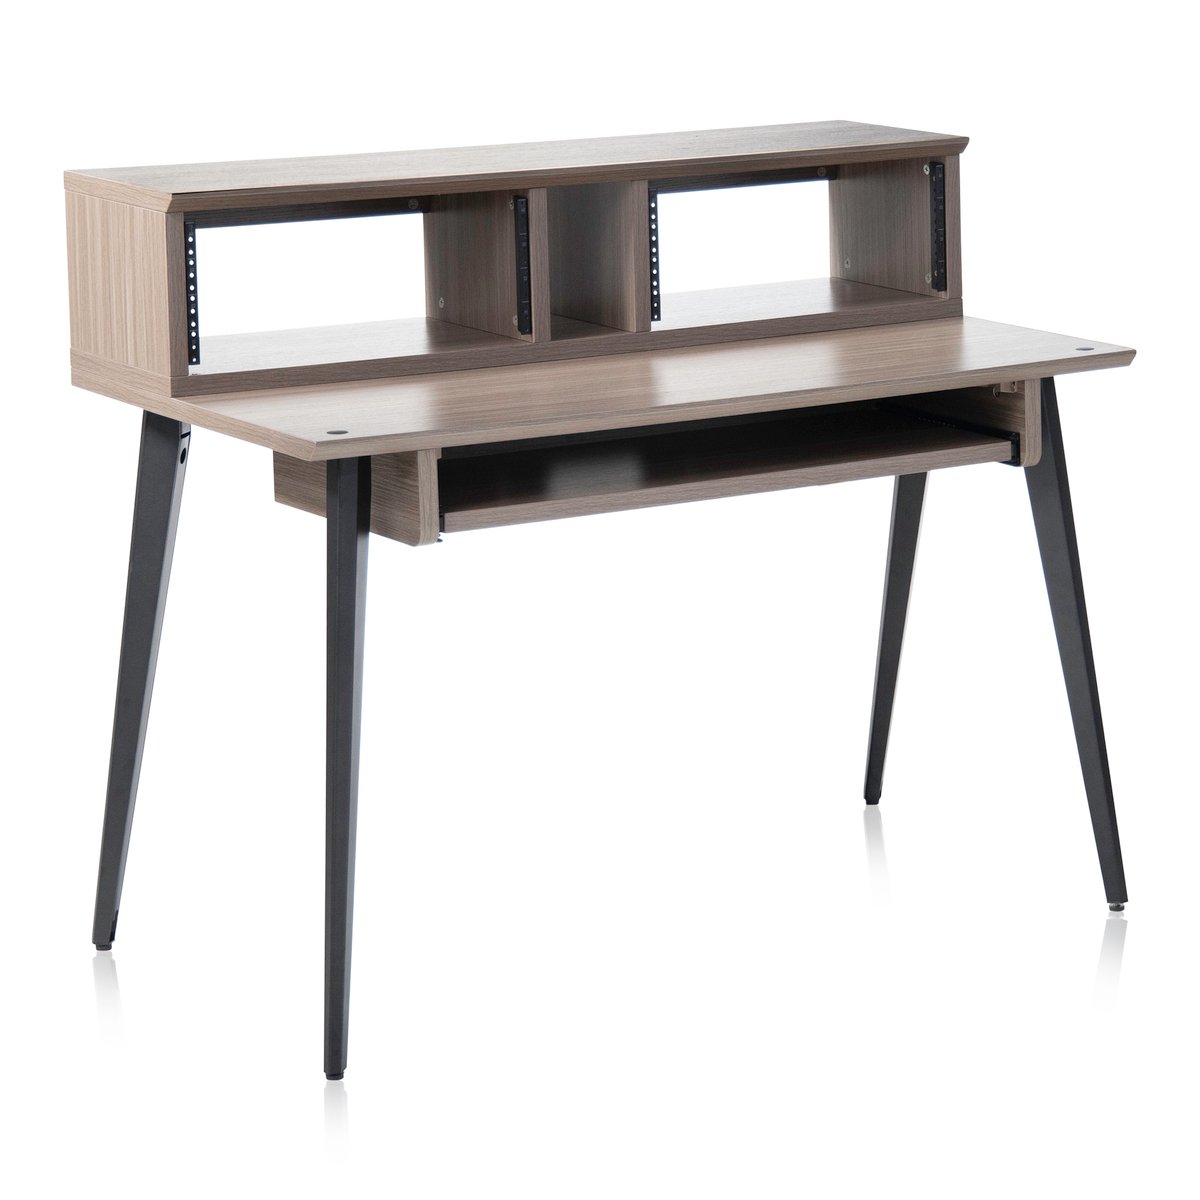 Elite Furniture Series Main Desk in Driftwood Grey Finish